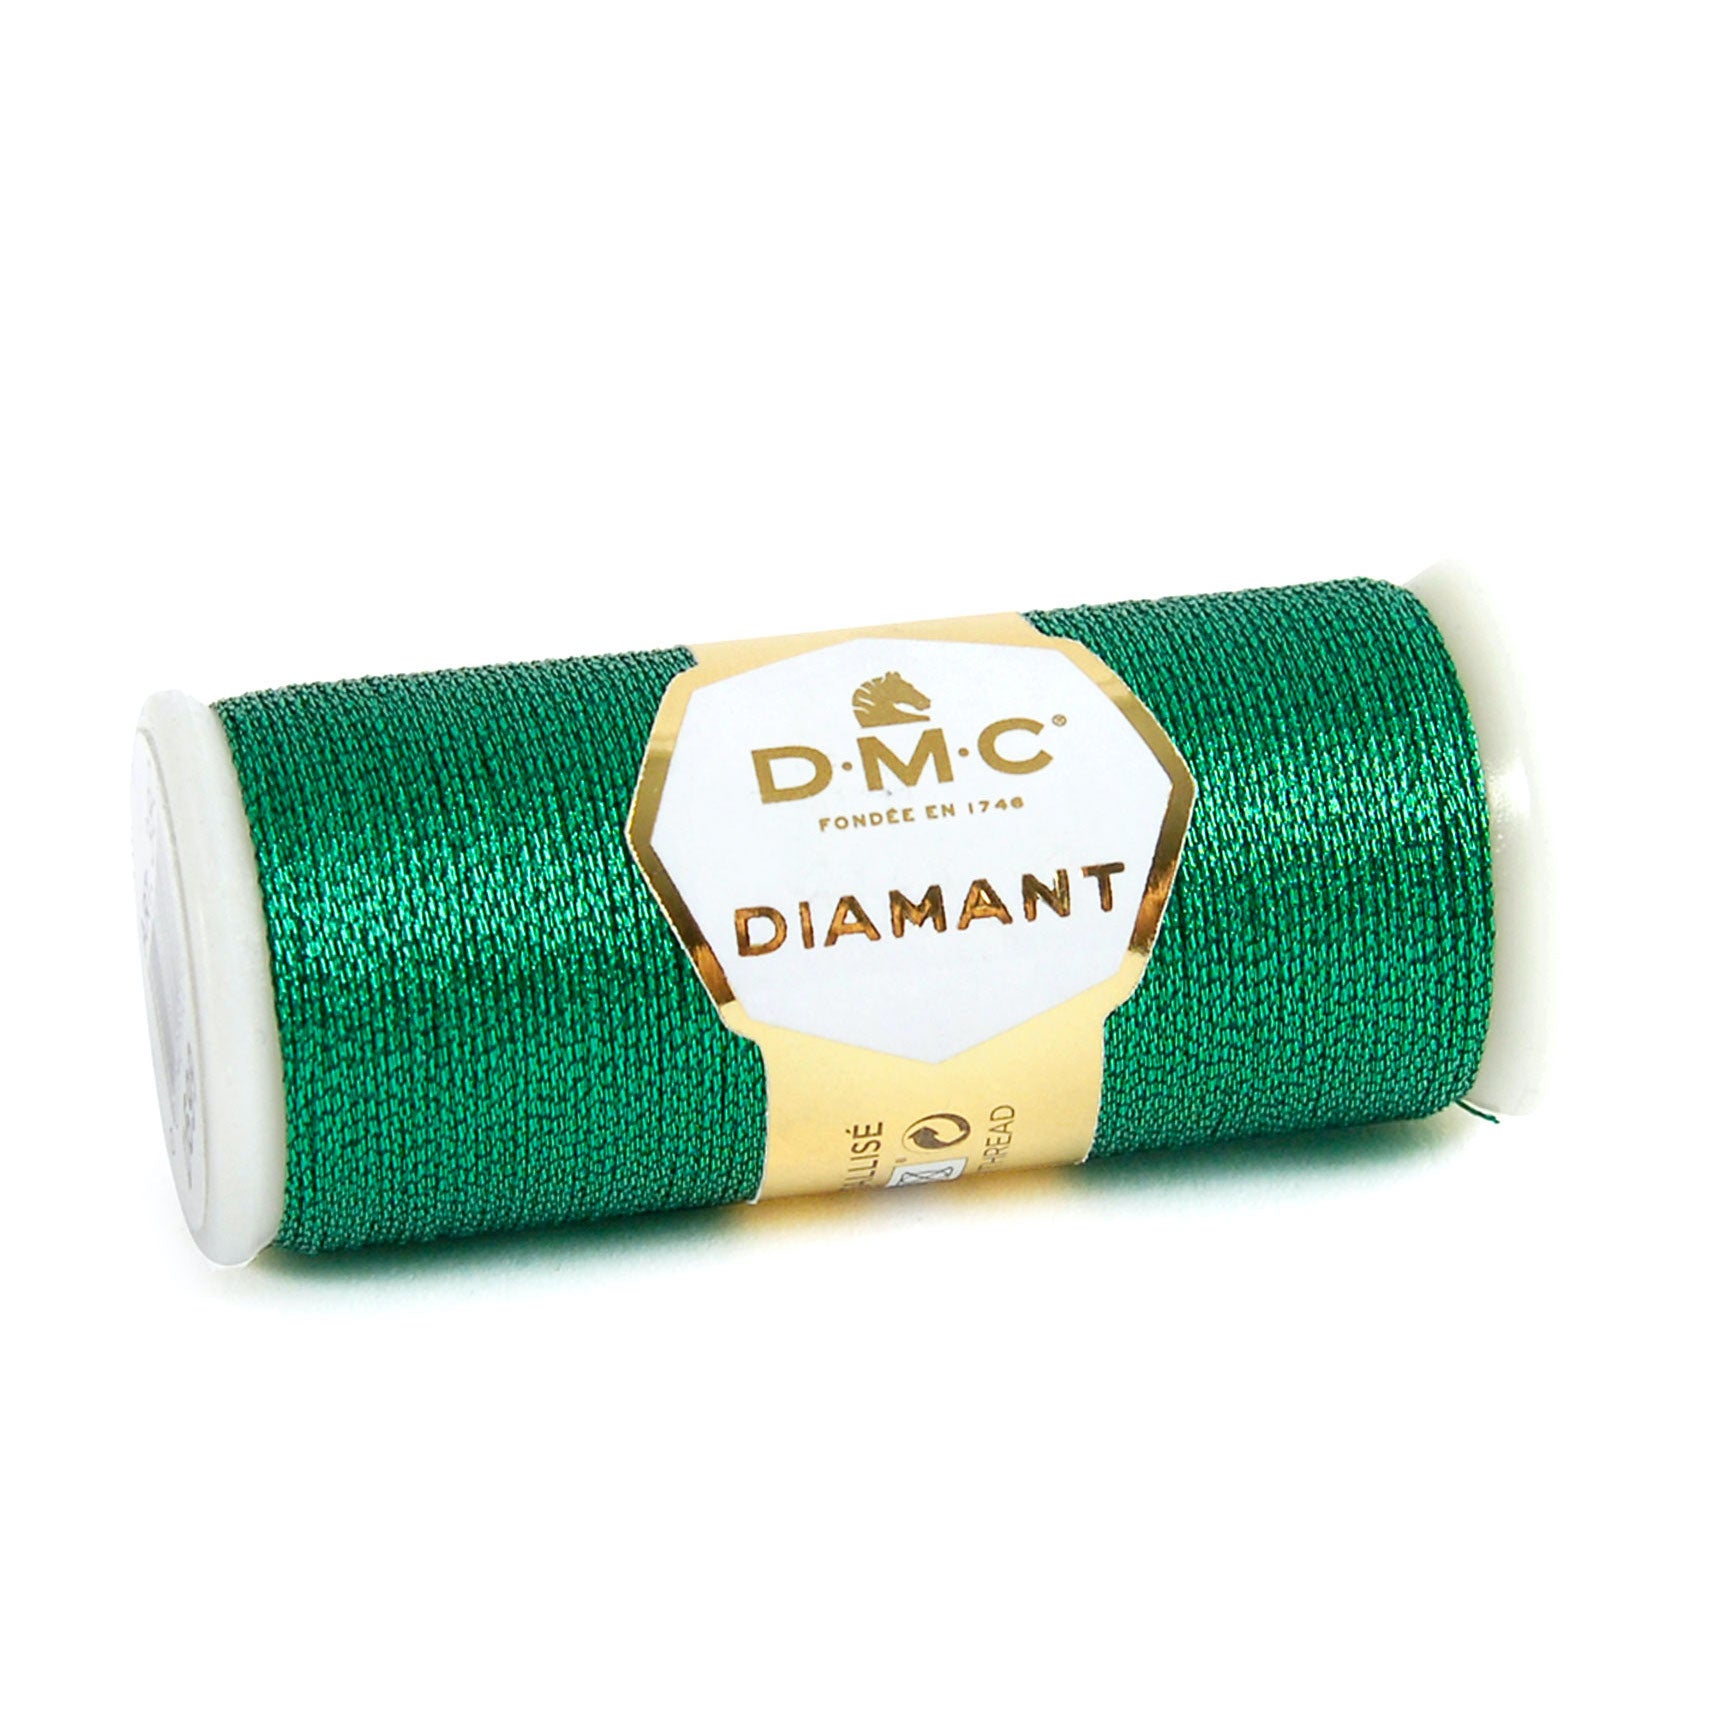 DMC Diamant Floss - Trapunto